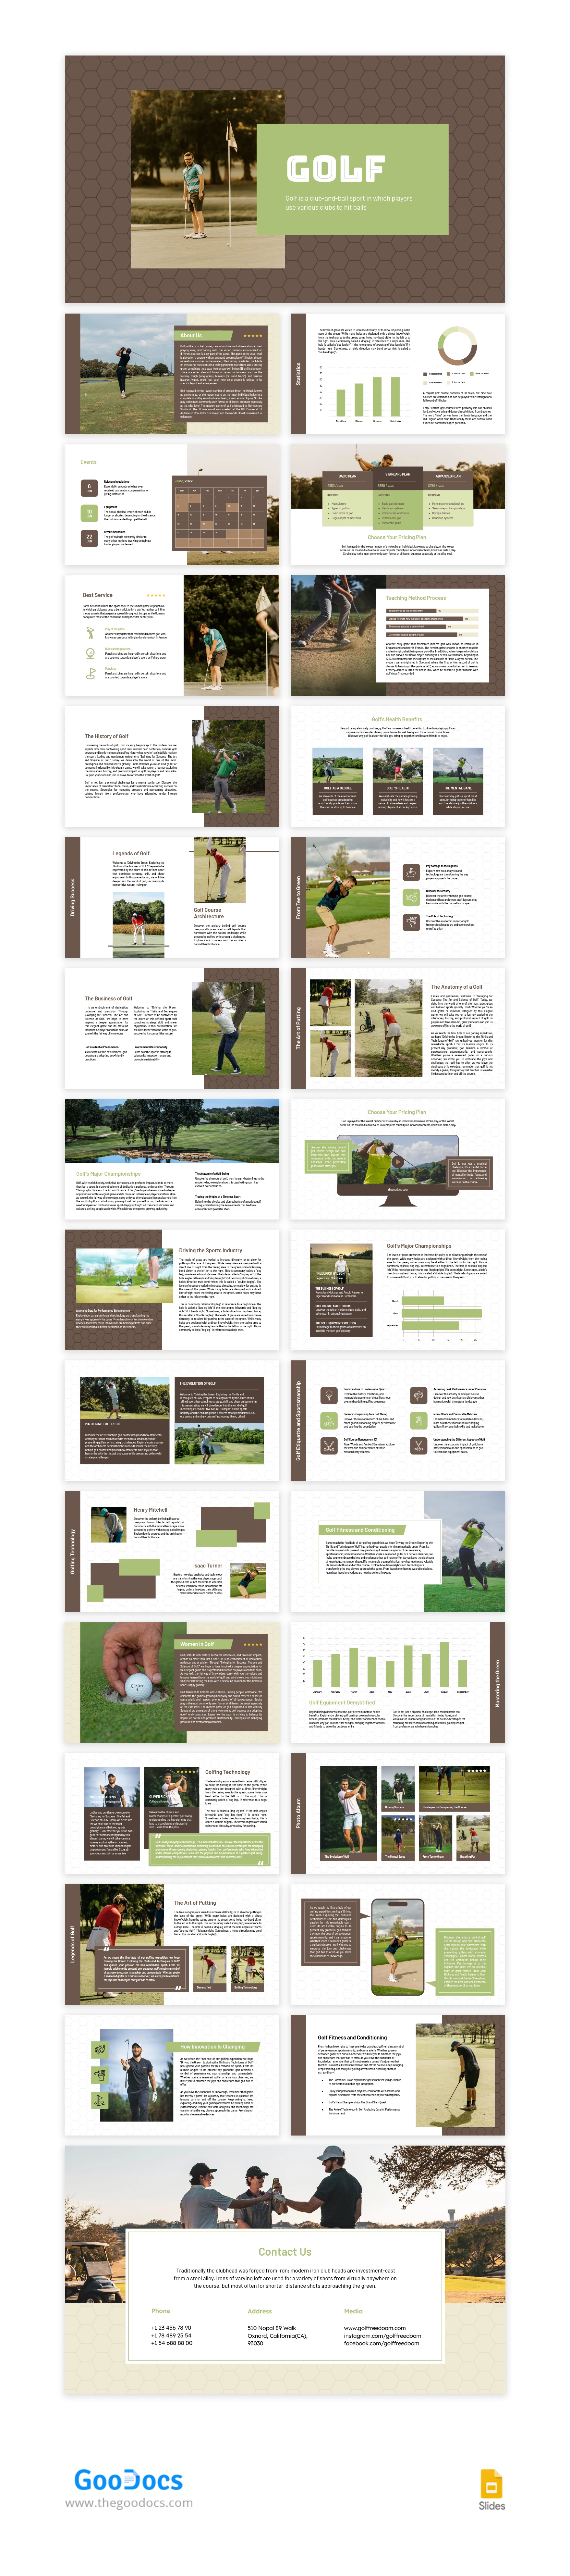 Bellissimo sport golf marrone - free Google Docs Template - 10067059